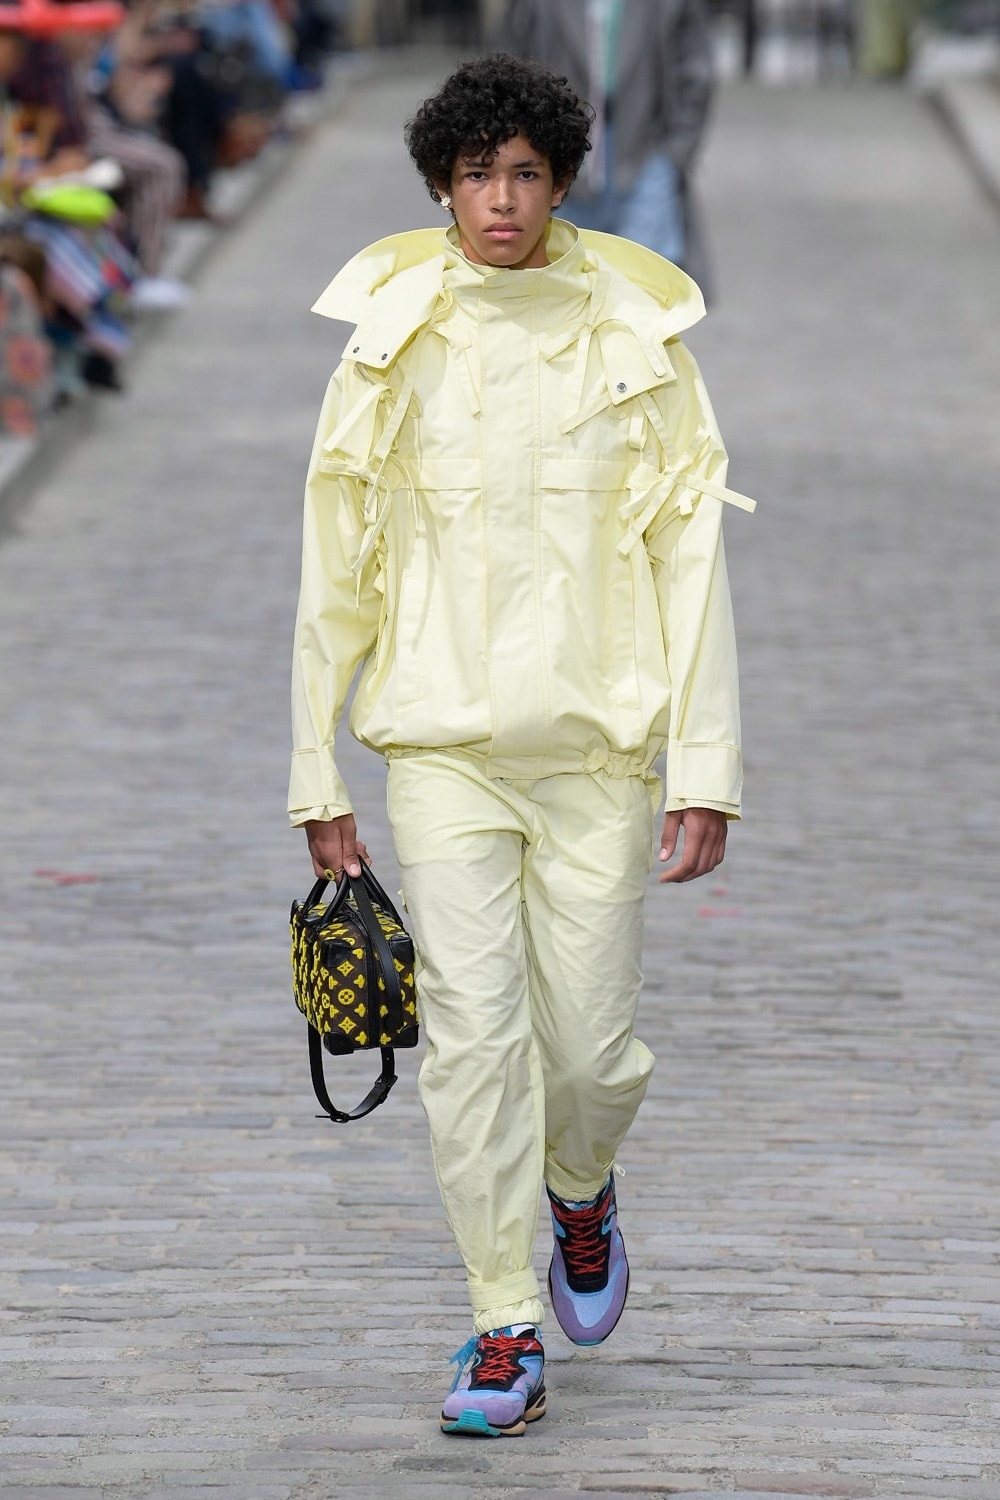 Louis Vuitton Virgil Abloh Spring Summer 2020 Paris Fashion Week Men's Show Collection Jacket Pants Yellow